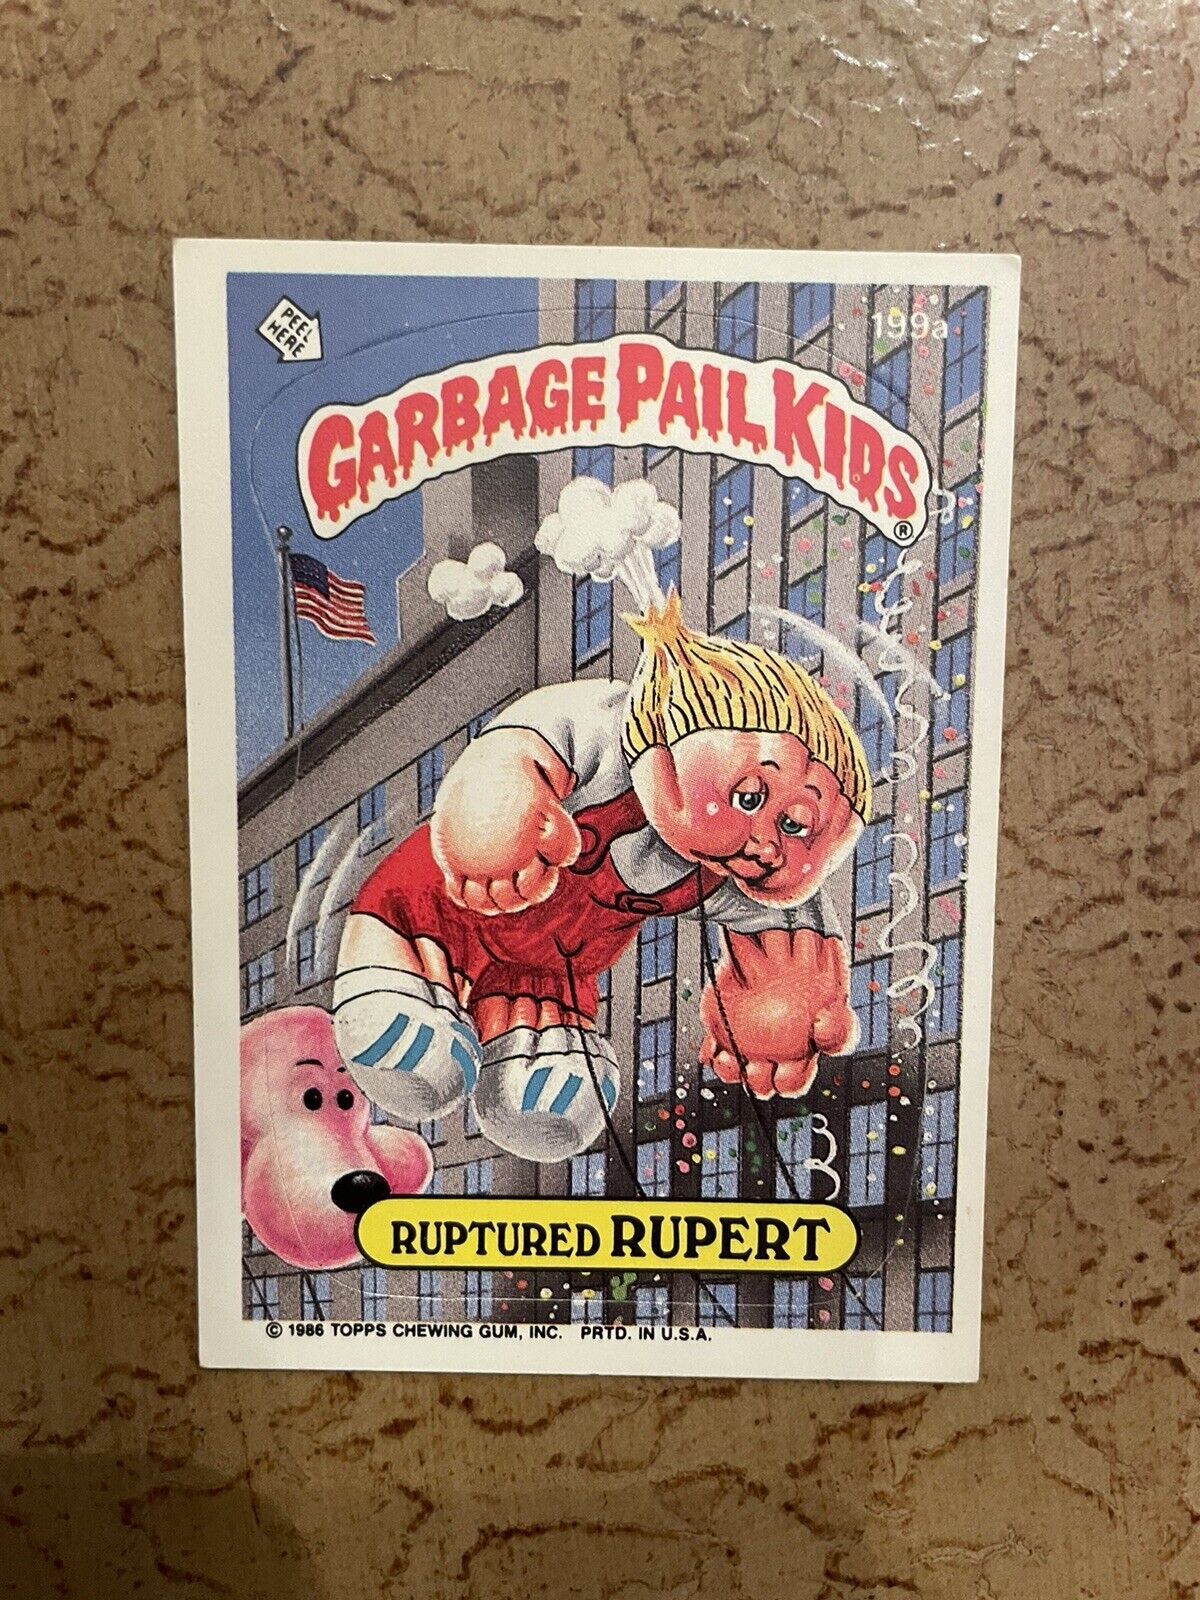 Ruptured RUPERT 199a Vintage Garbage Pail Kids 1986 Series 5 Trading Card